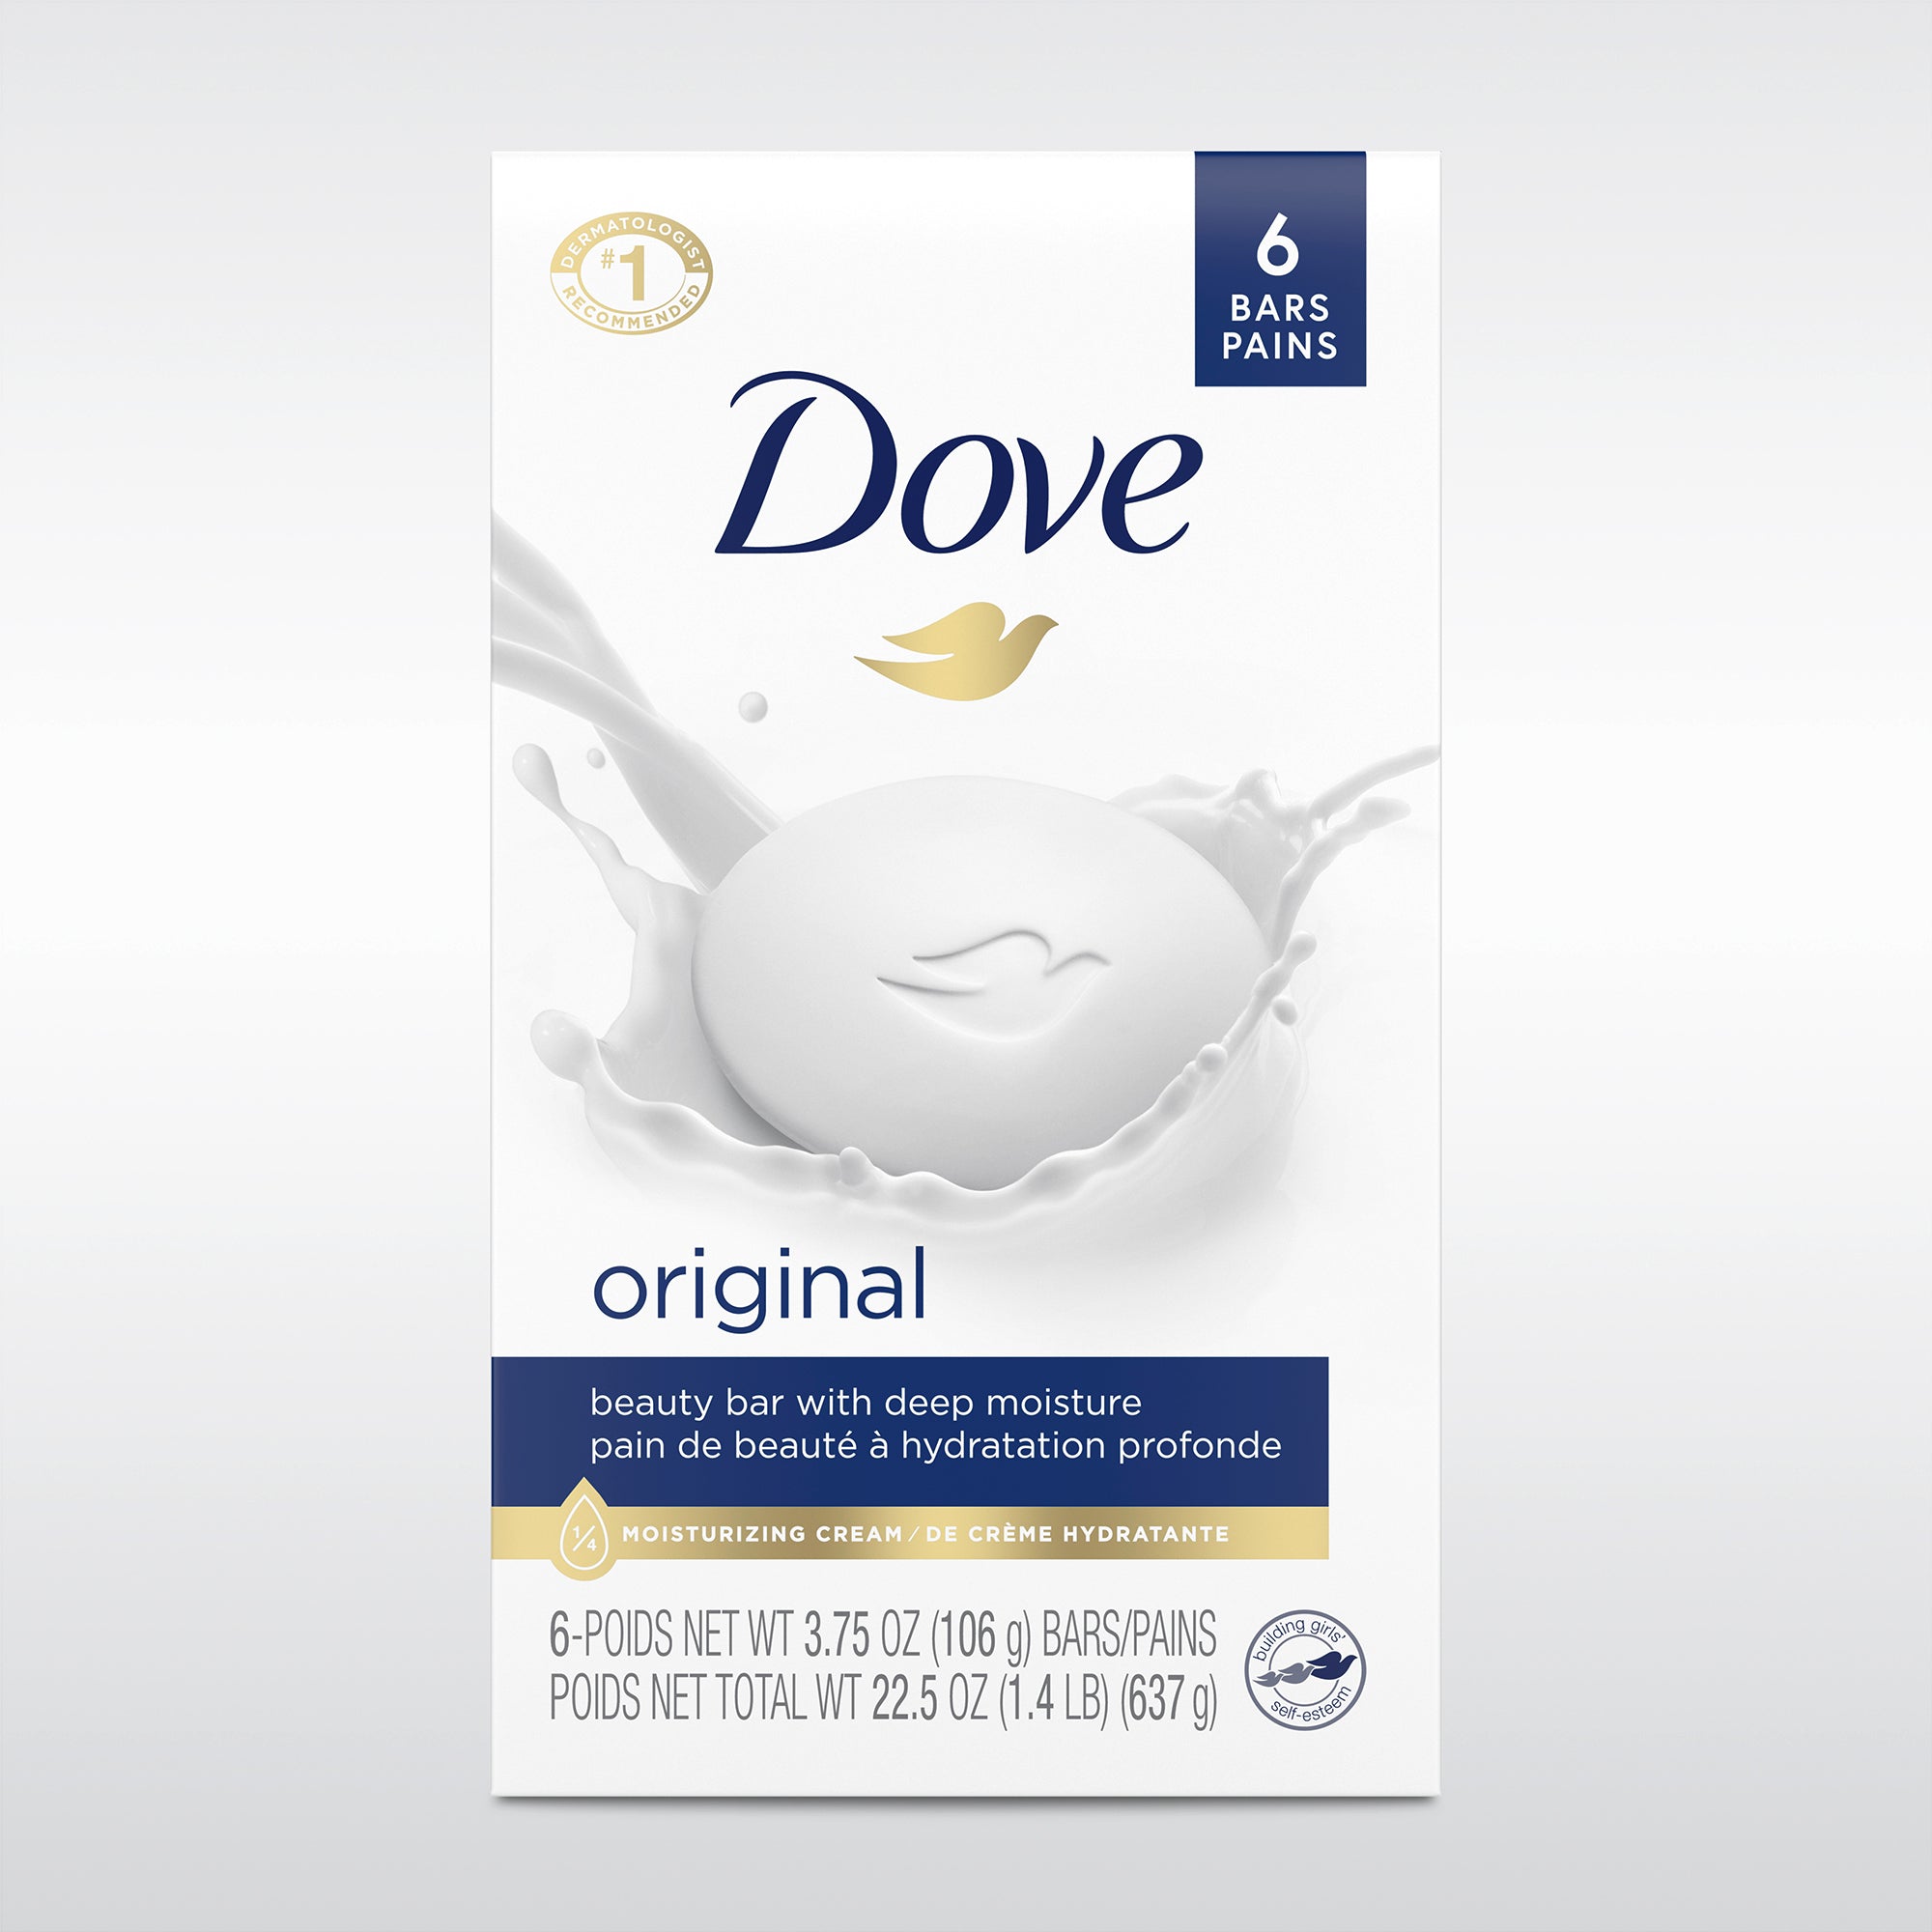 Dove original beauty bar